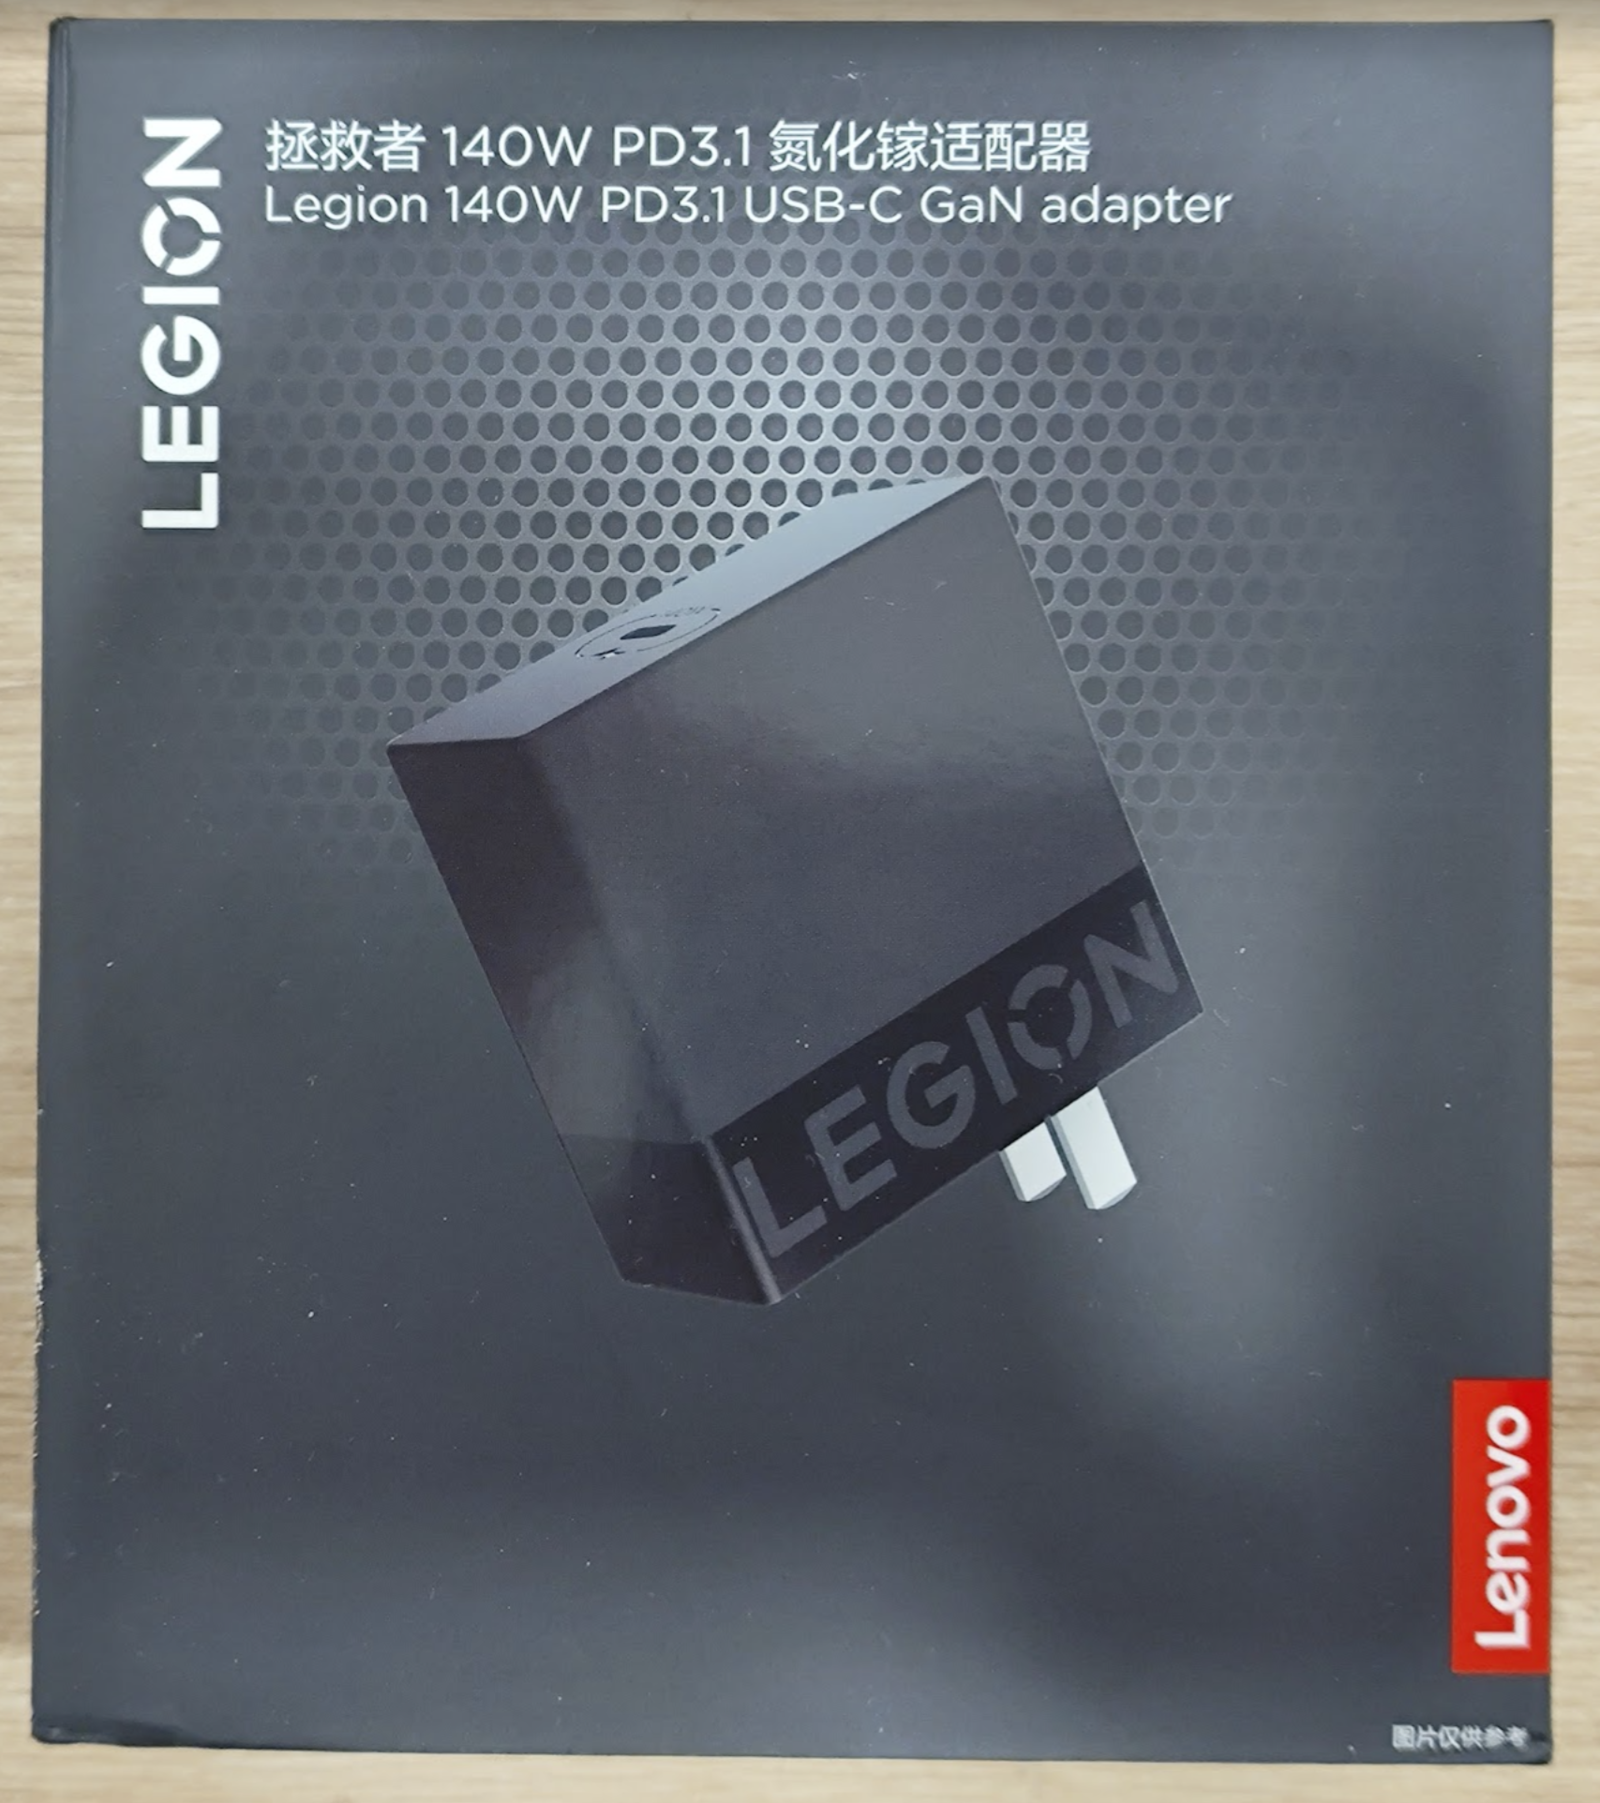 Teardown of Lenovo Legion 140W PD3.1 USB-C GaN Laptop Charger